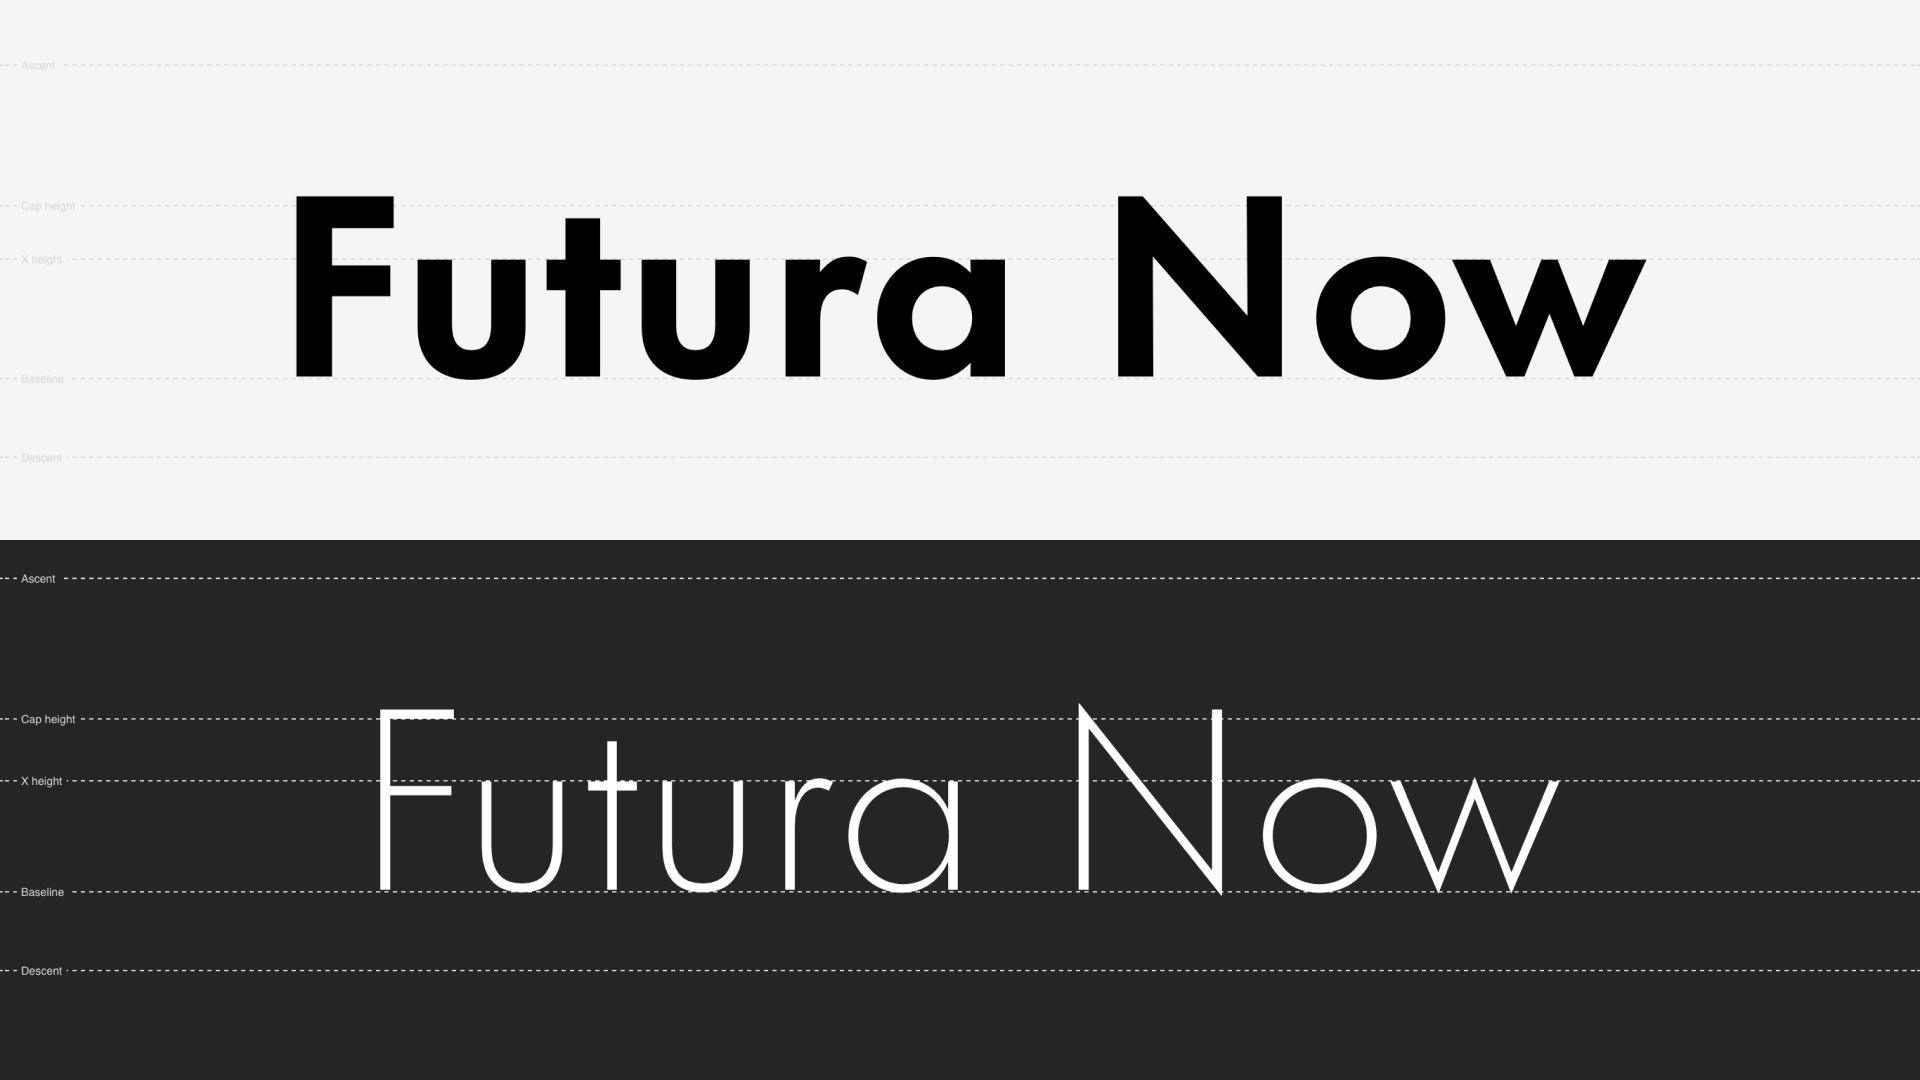 Futura Now Released